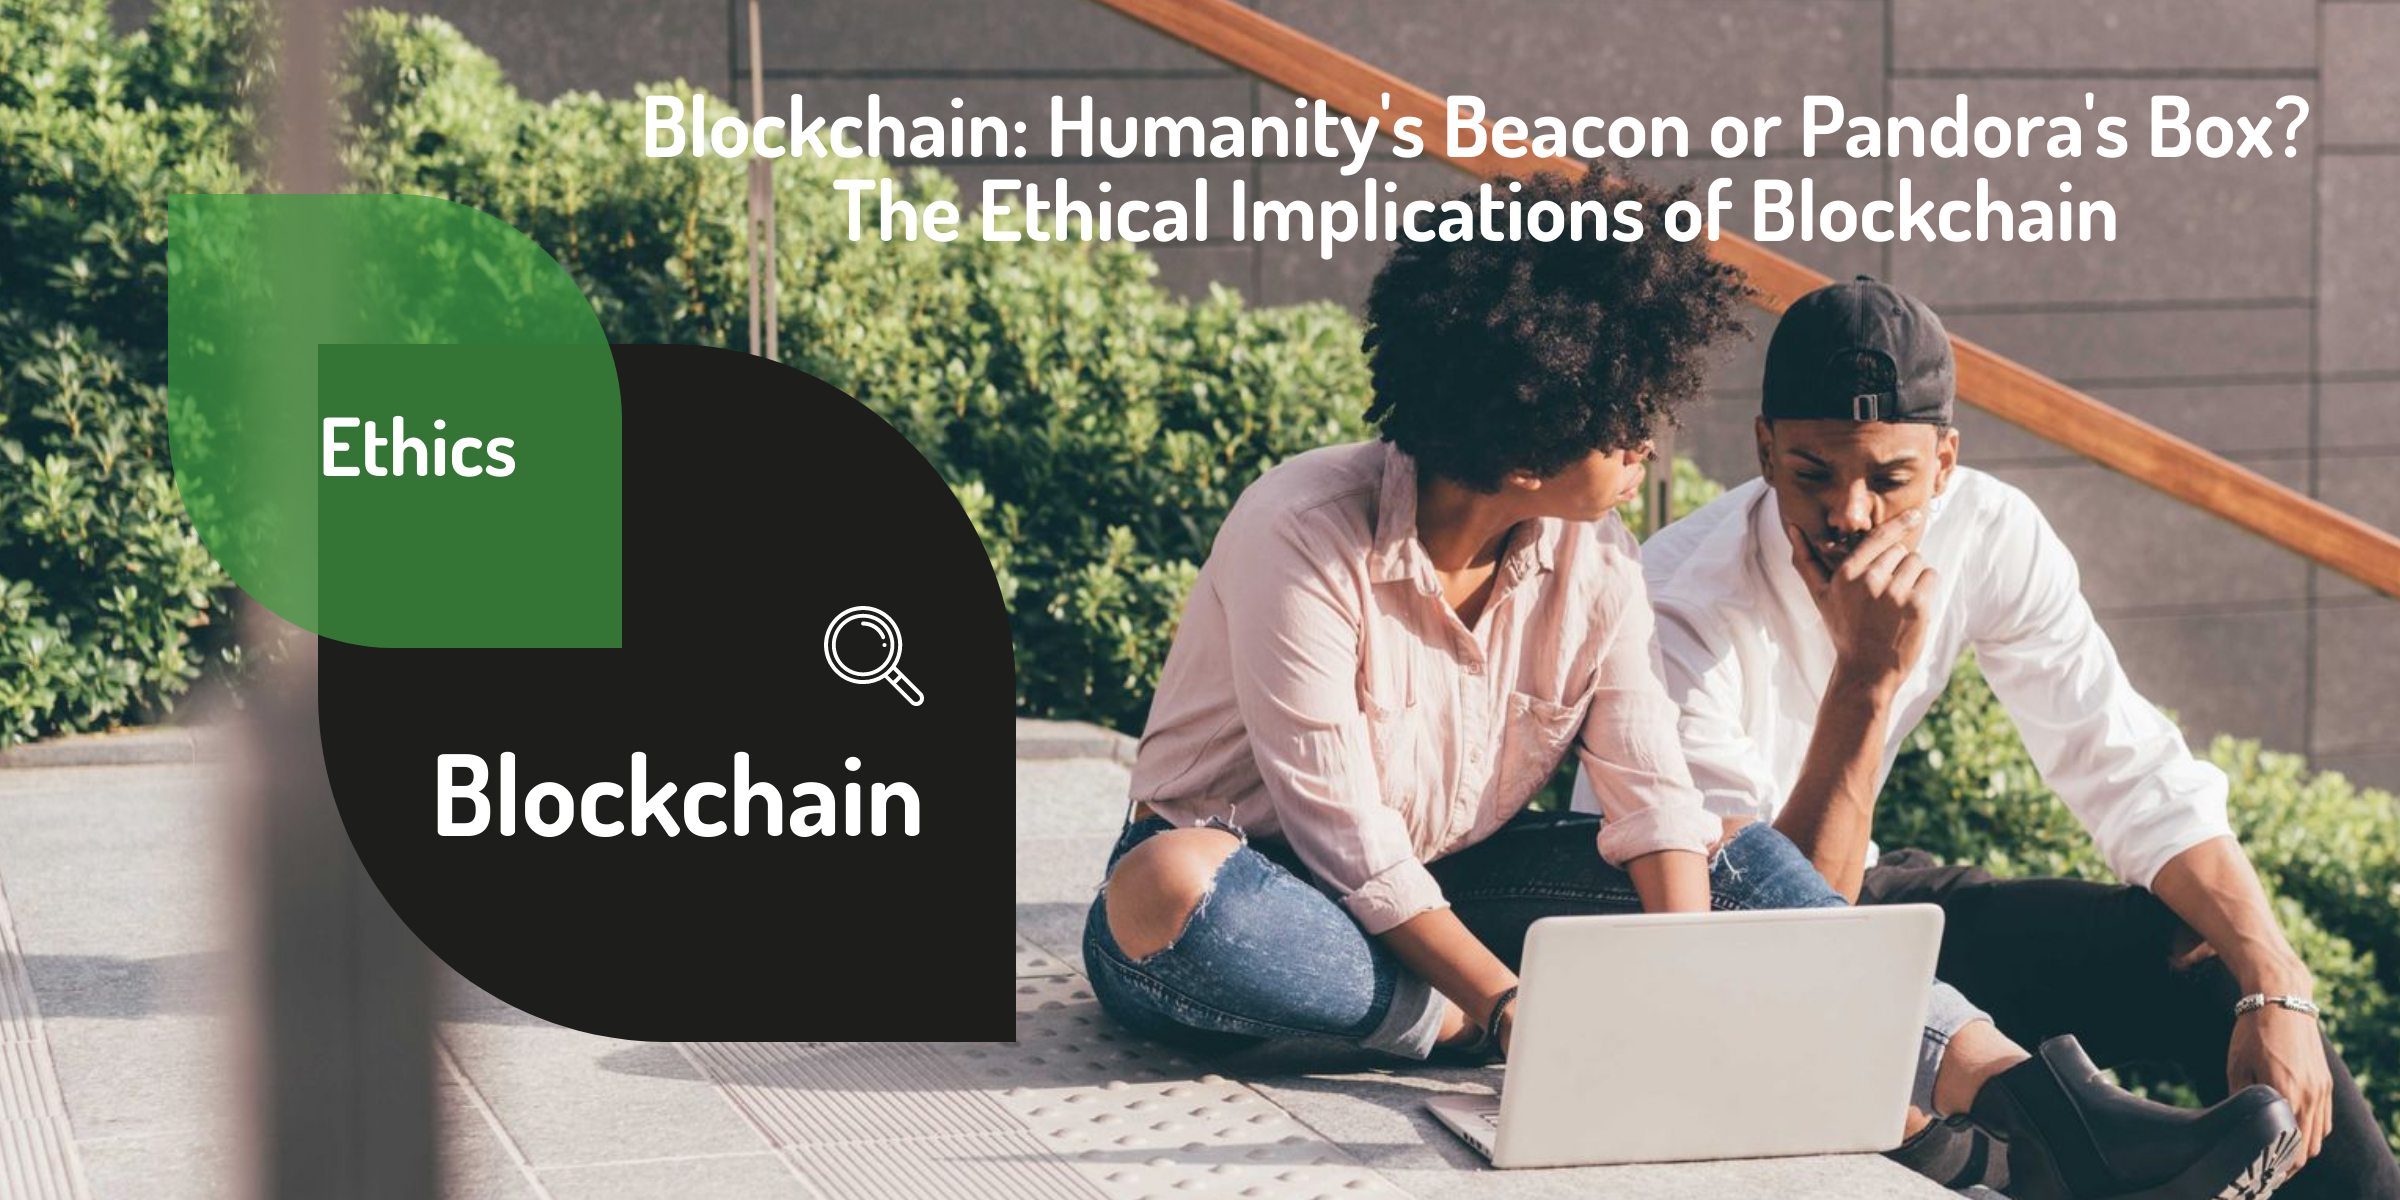 Blockchain: Humanity's Beacon or Pandora's Box? The Ethical Implications of Blockchain